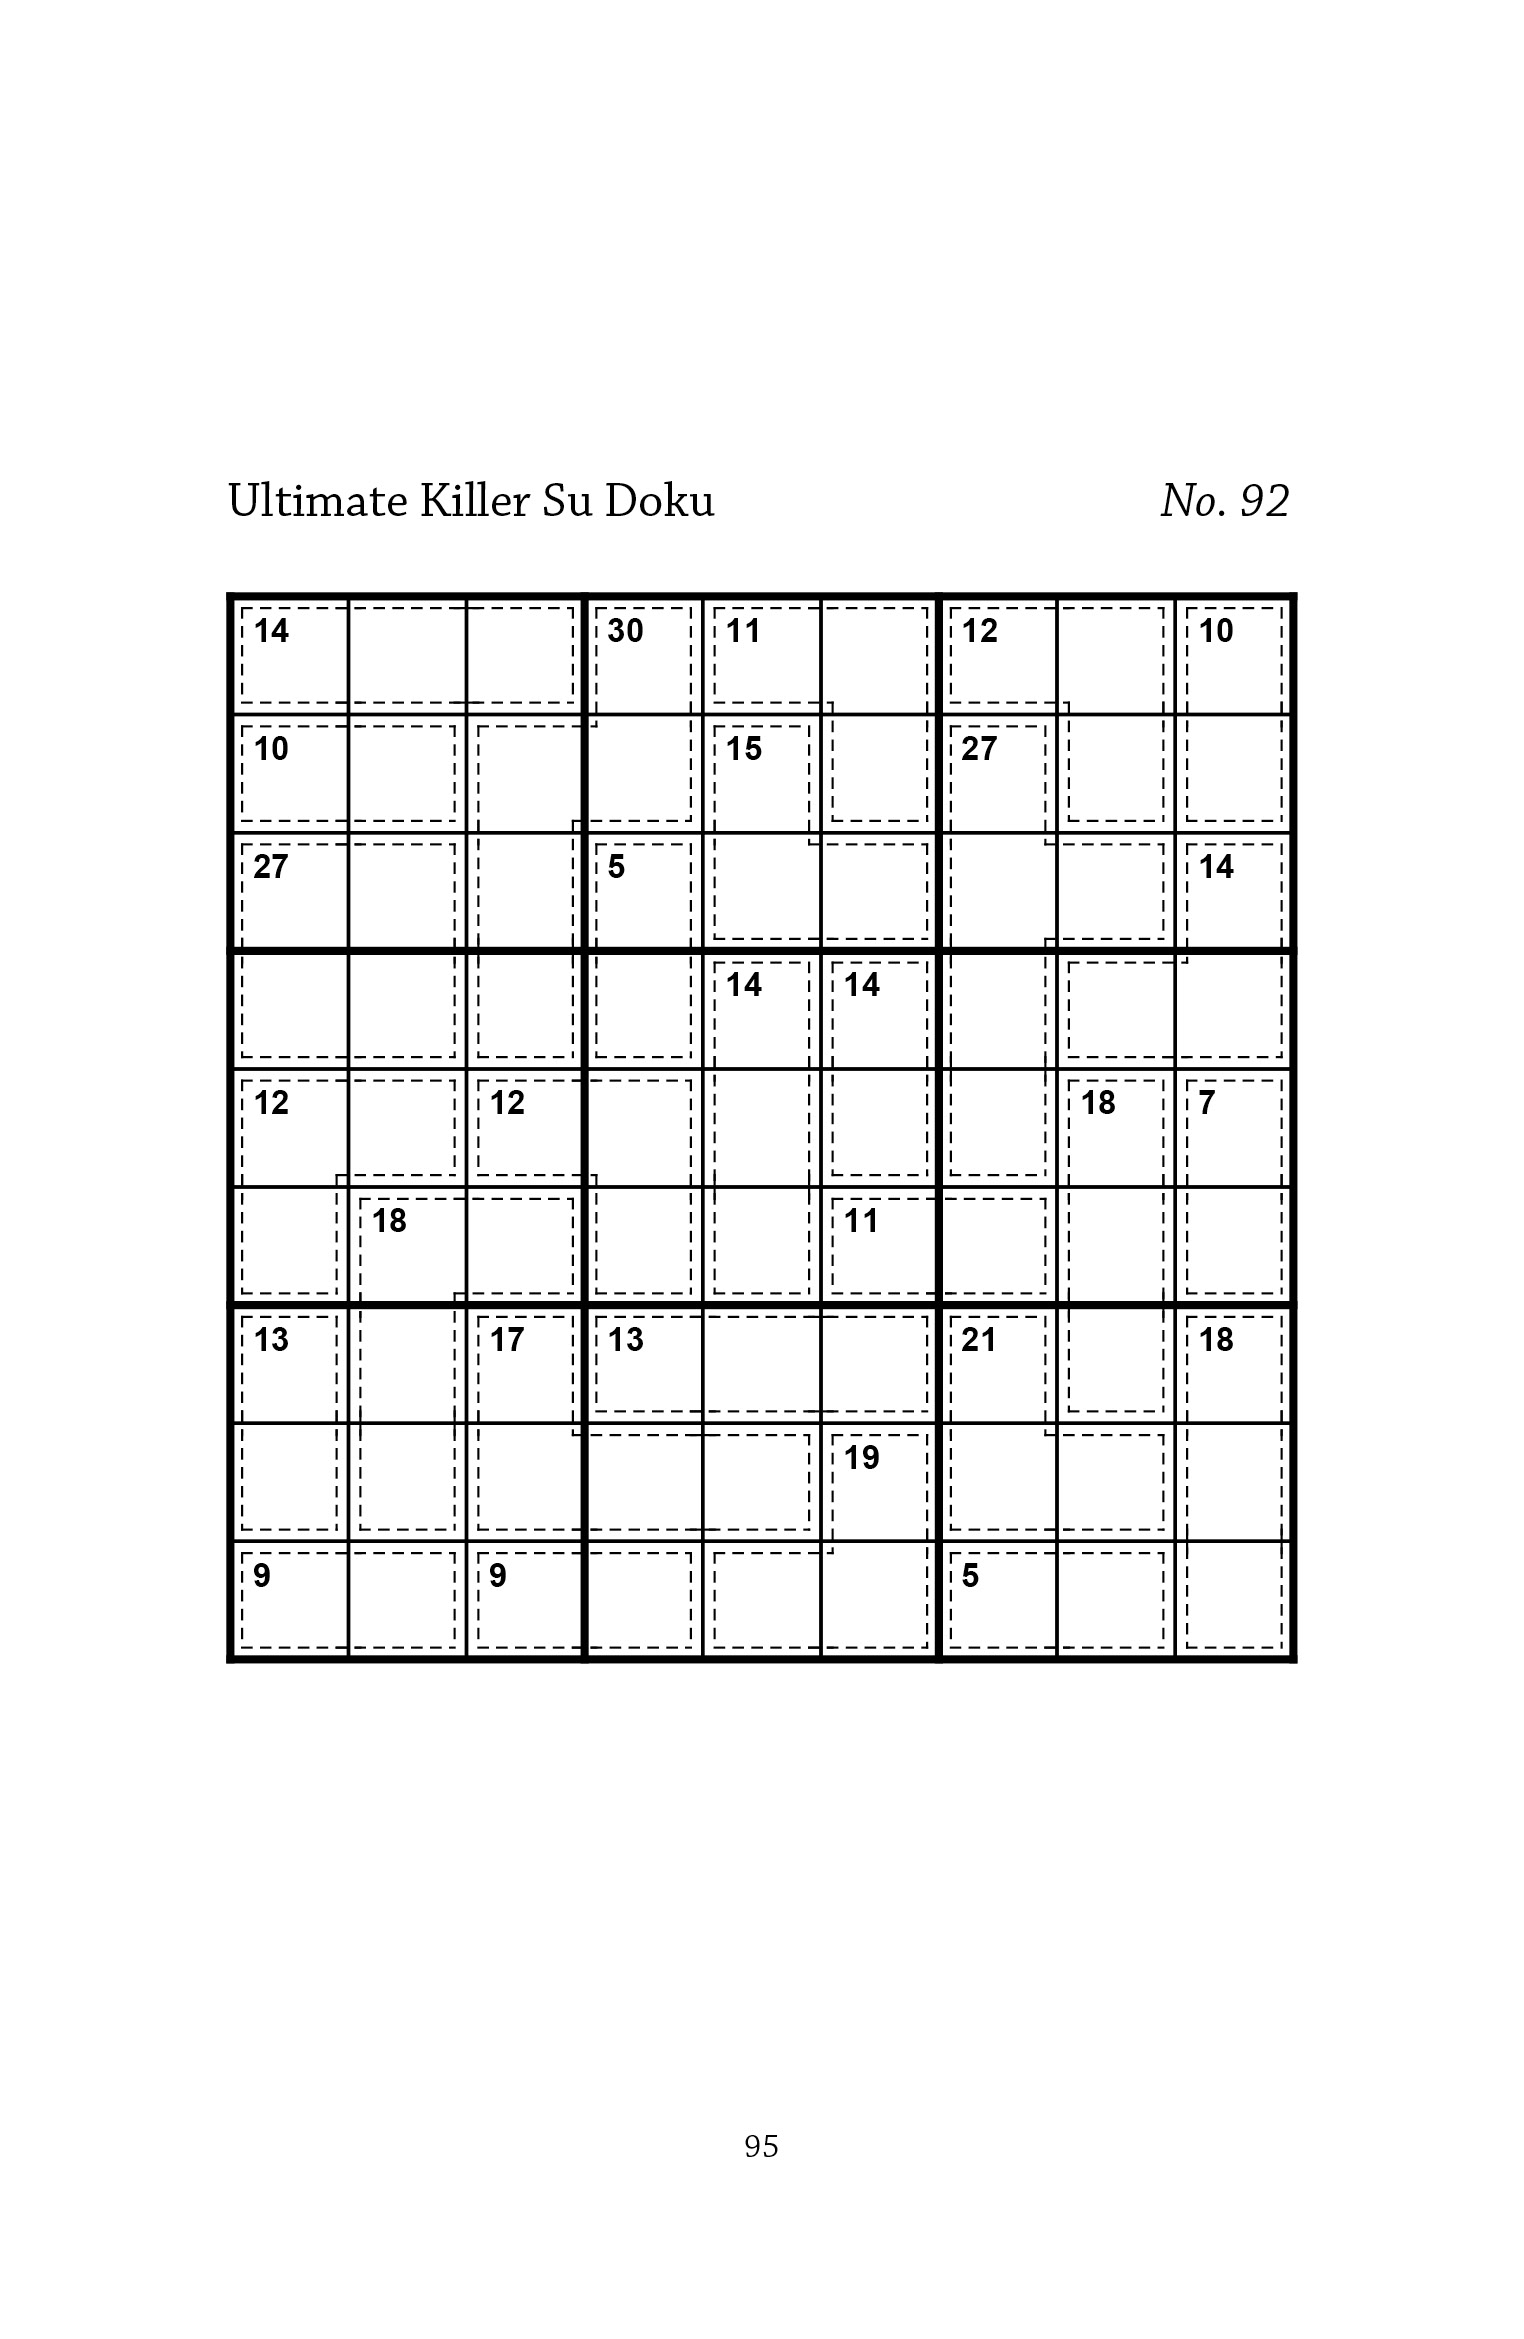 Un exemple de killer sudoku. Original images by Toon Spin (Toon81) (Own